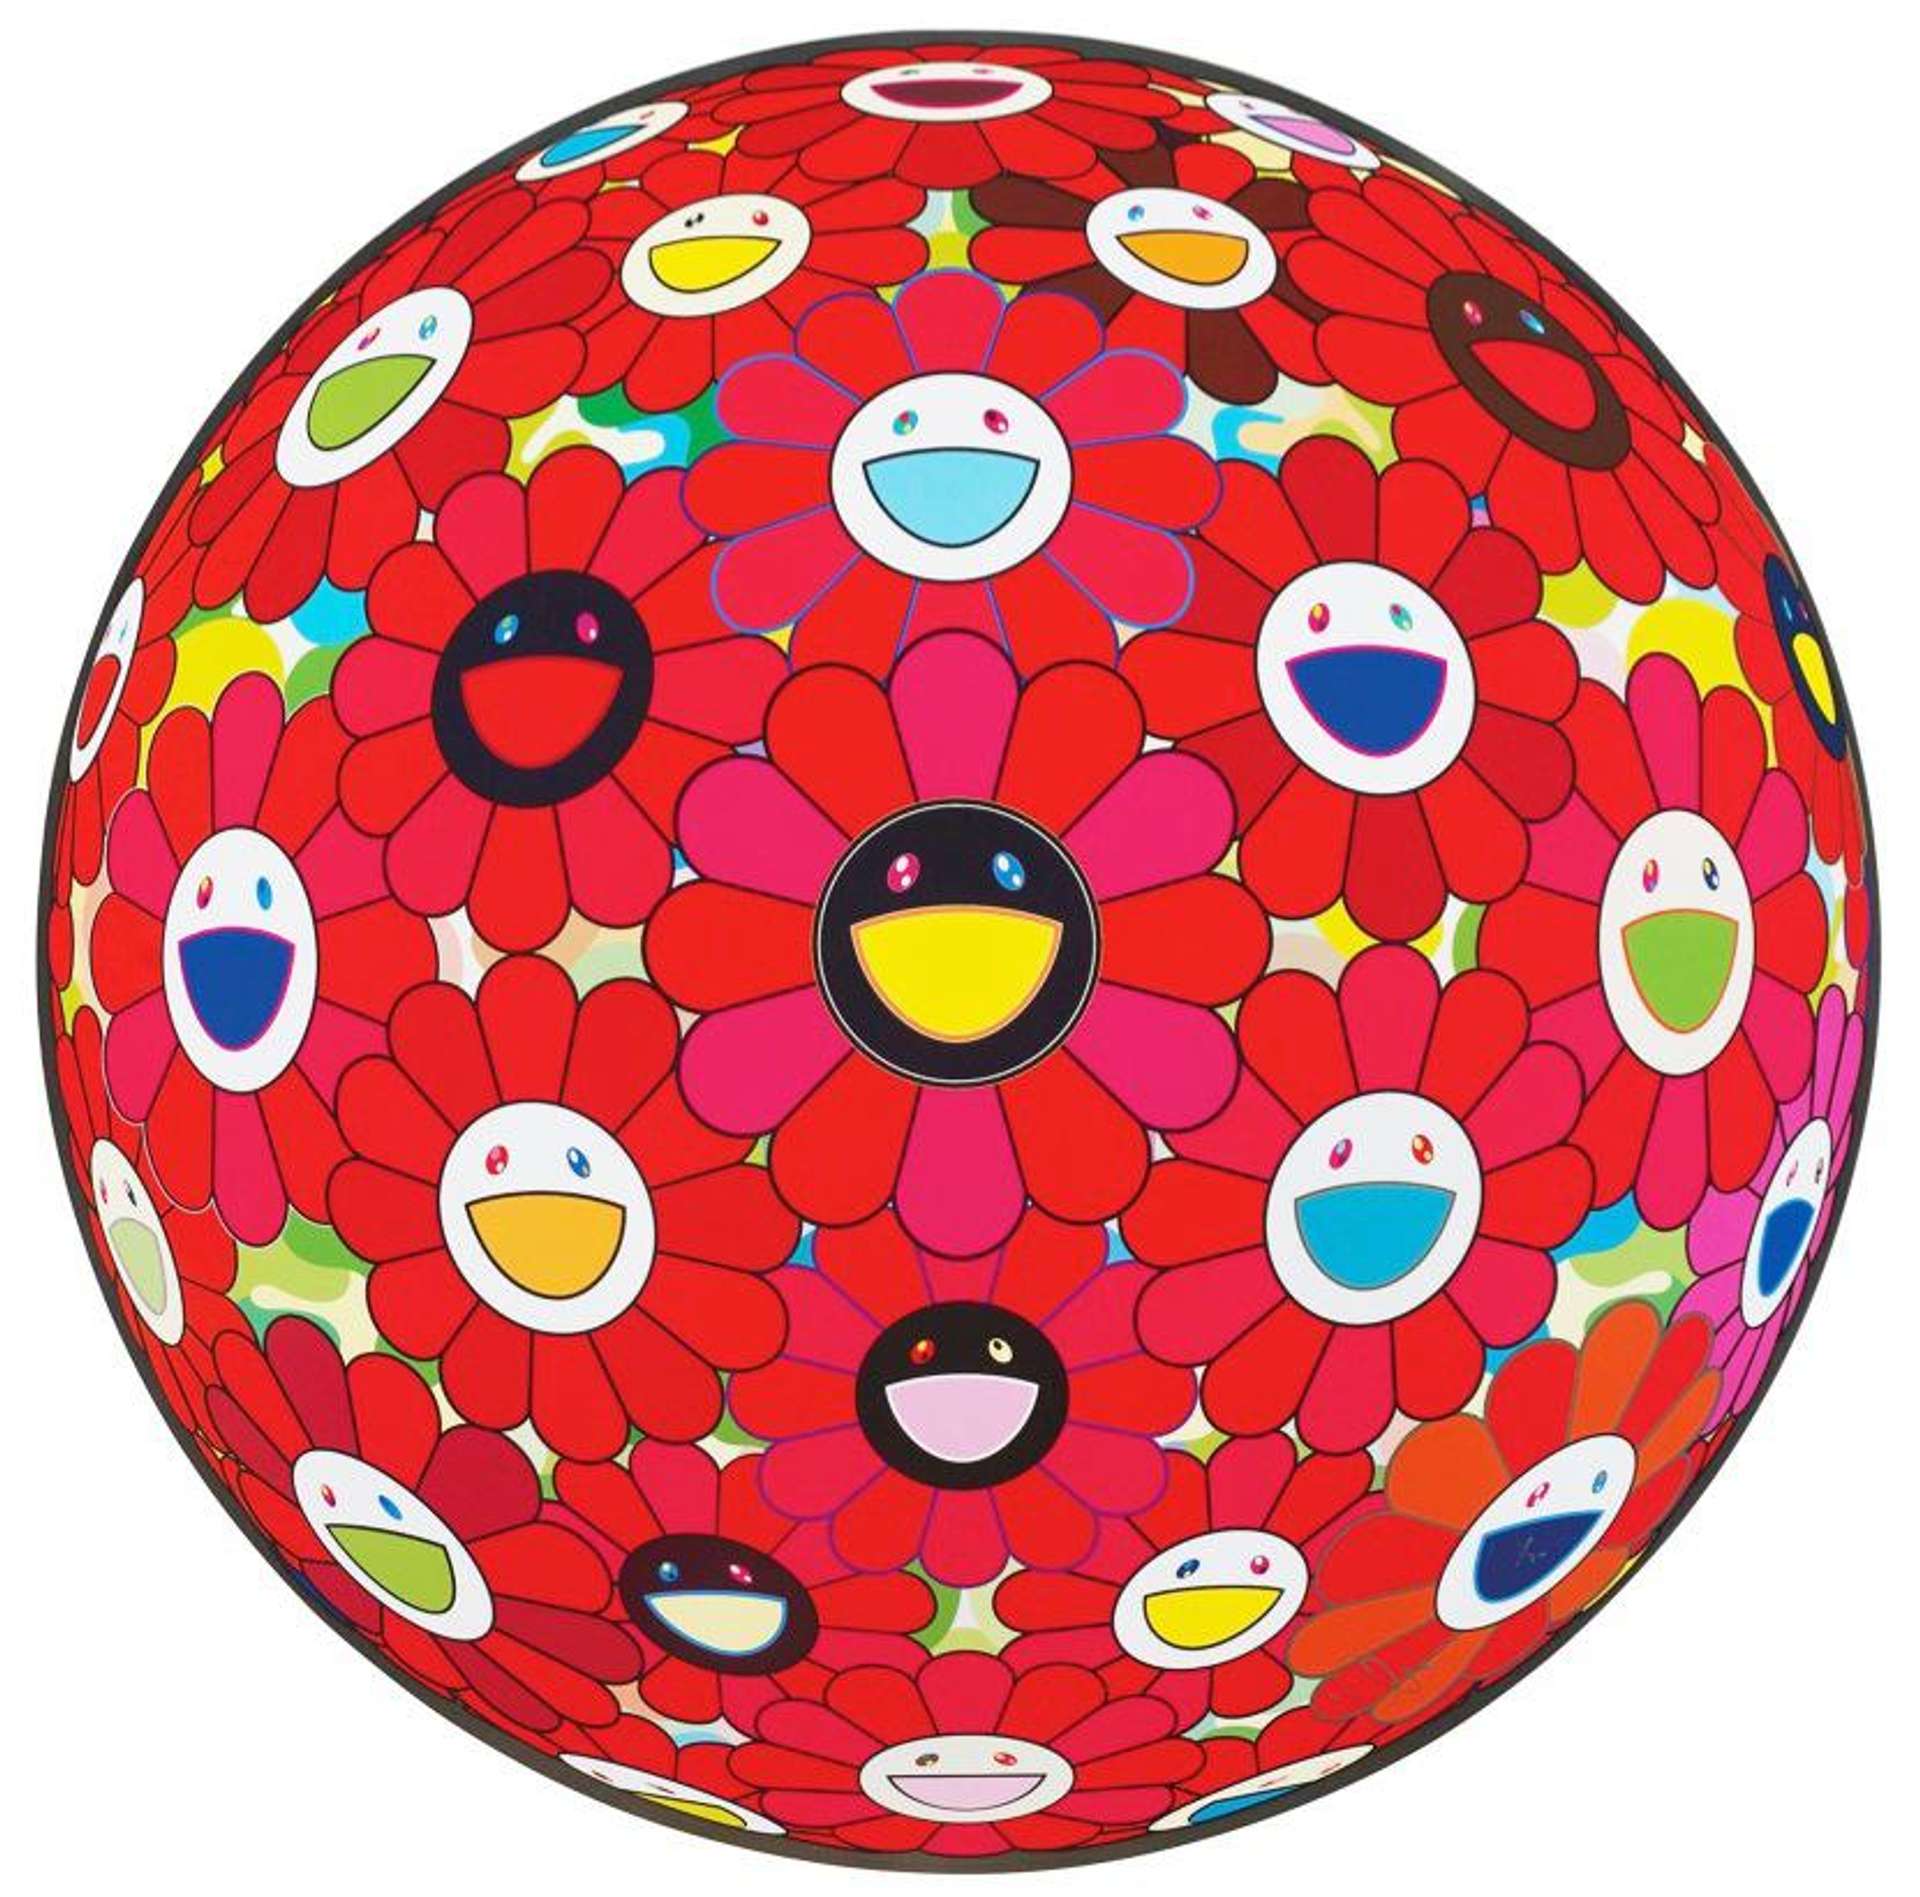 Takashi Murakami: Flower Ball: Letter to Picasso - Signed Print